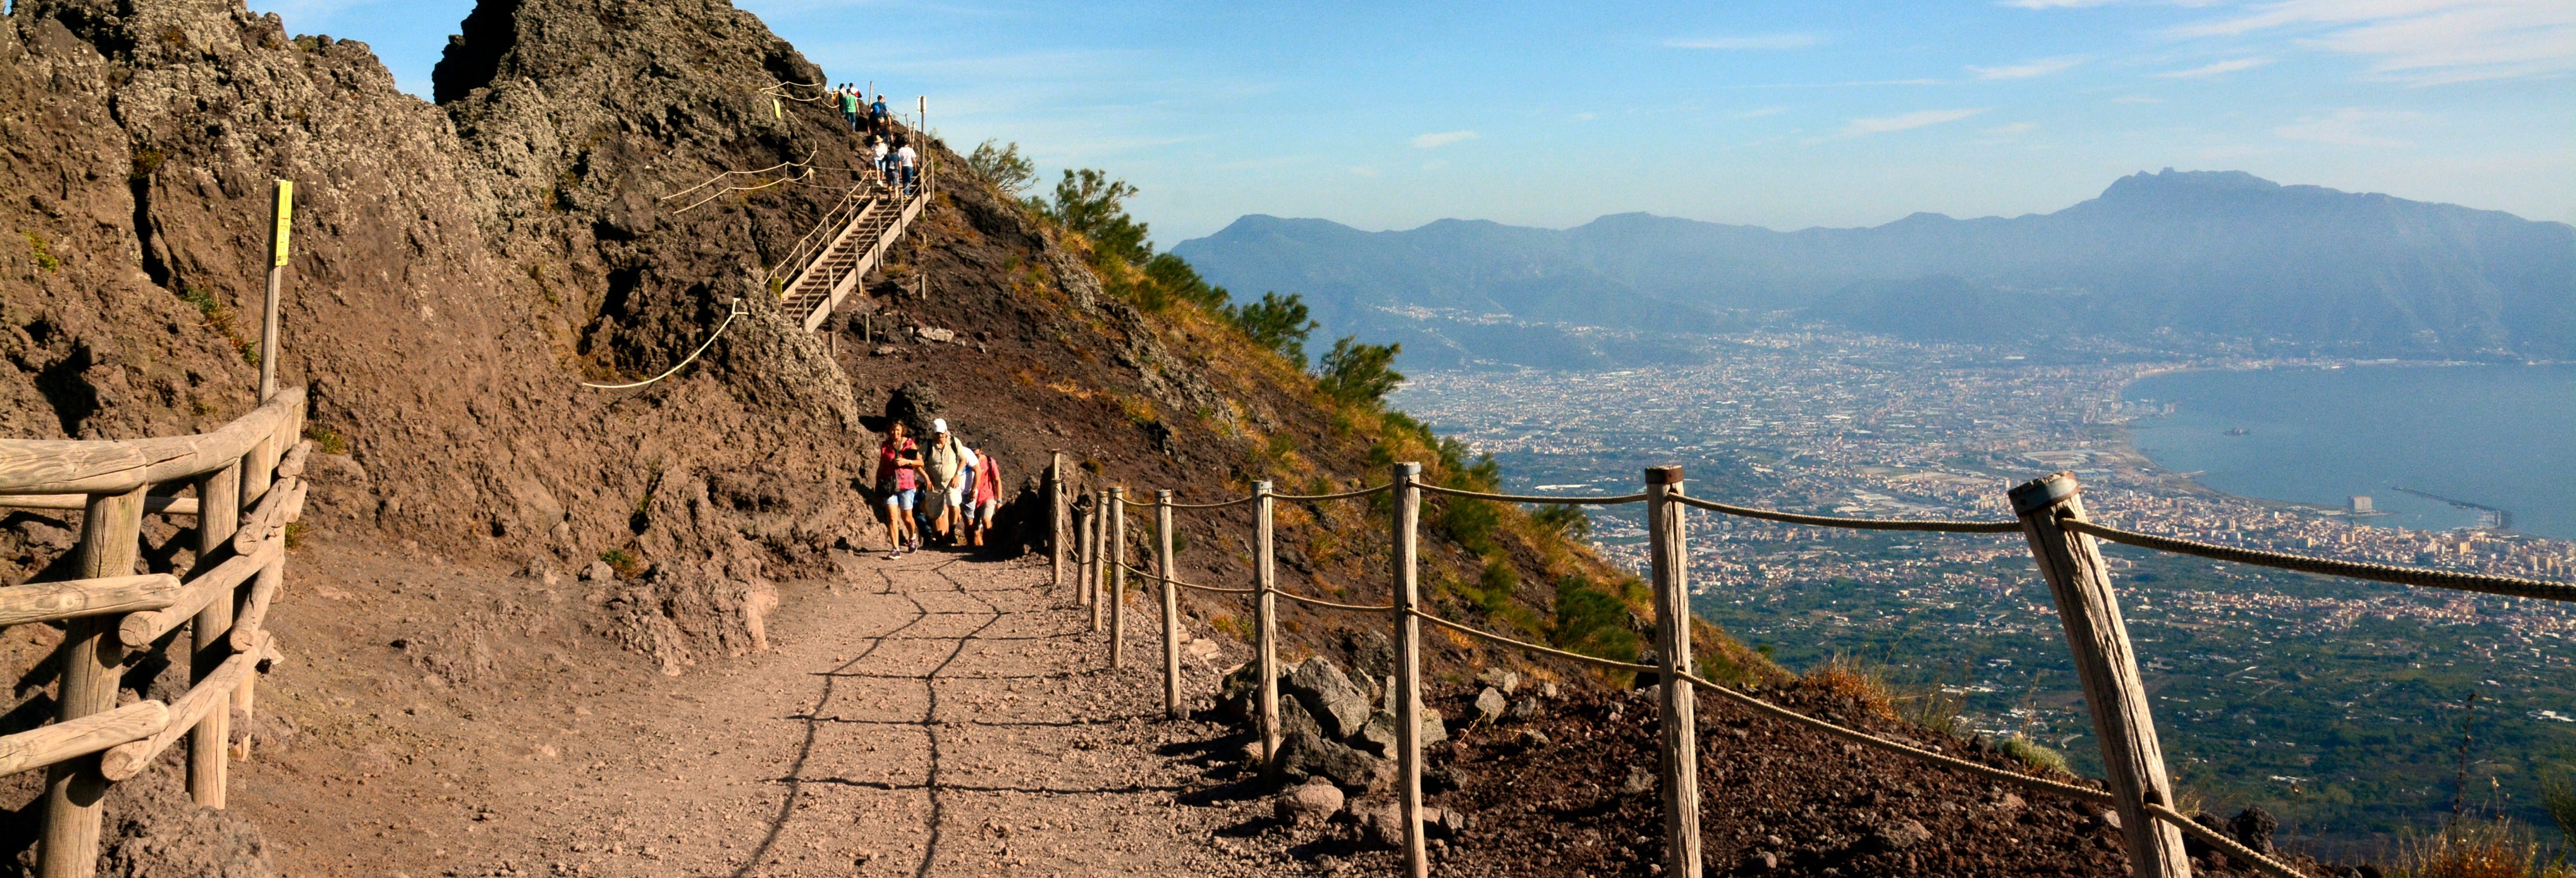 Trekking sul Vesuvio